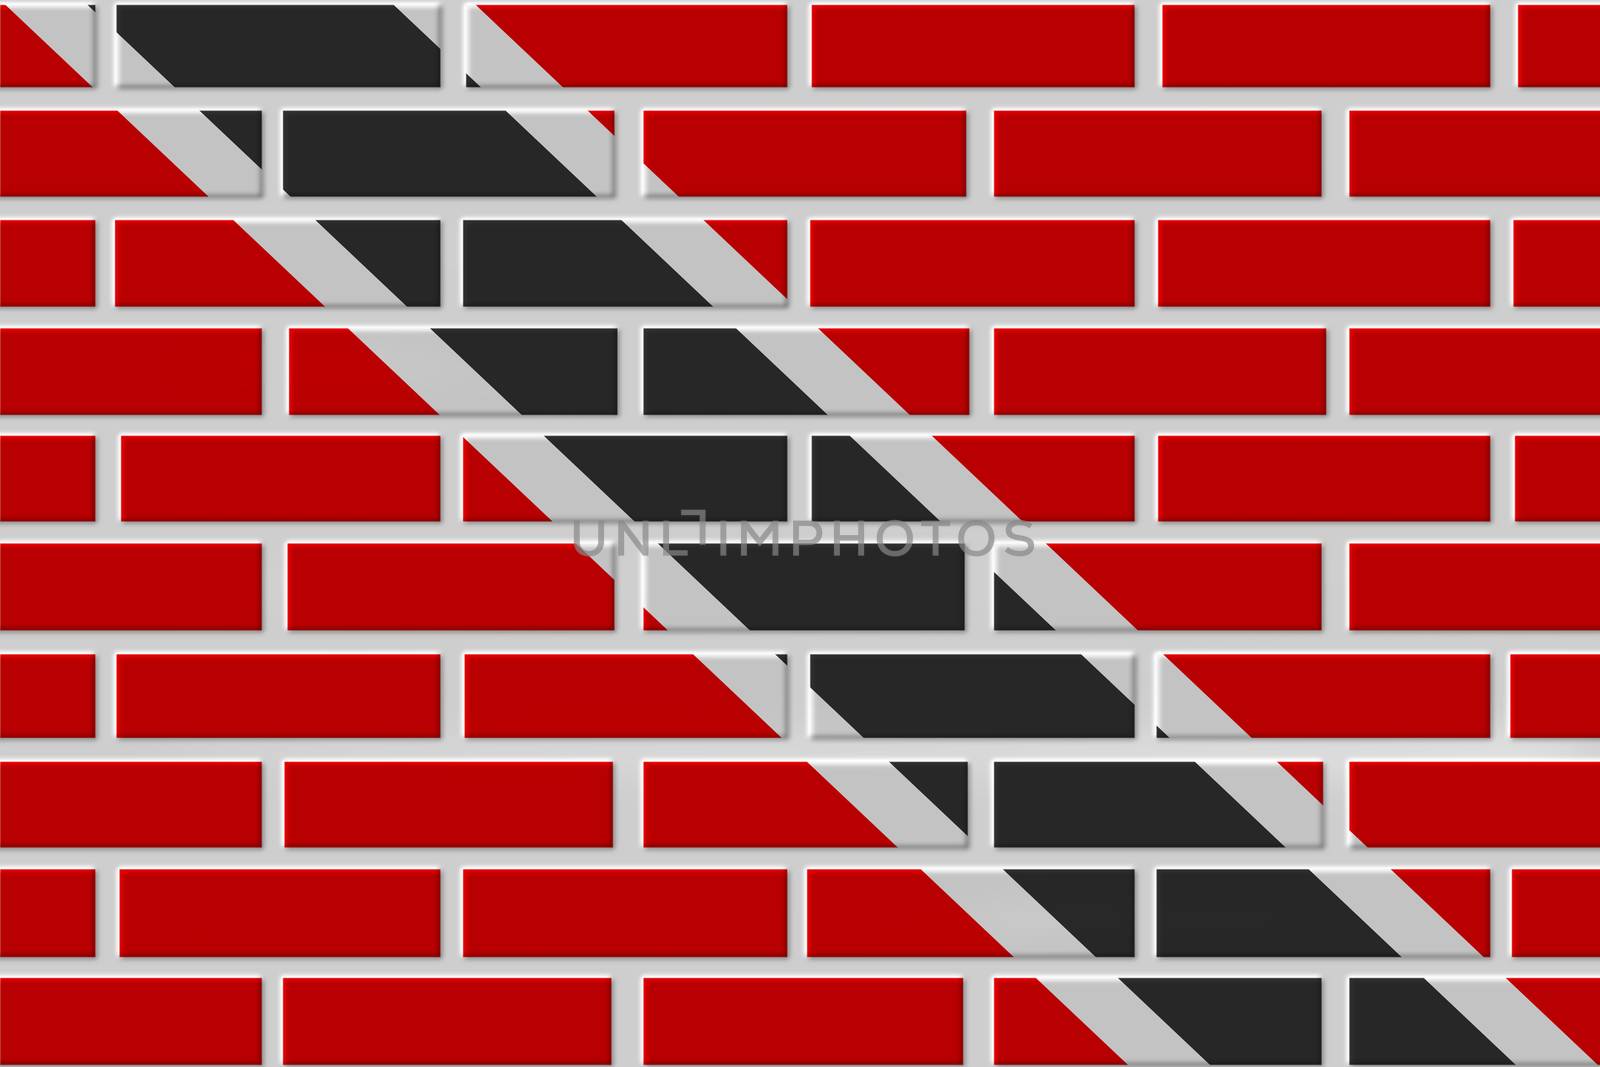 Trinidad and Tobago brick flag illustration by Visual-Content